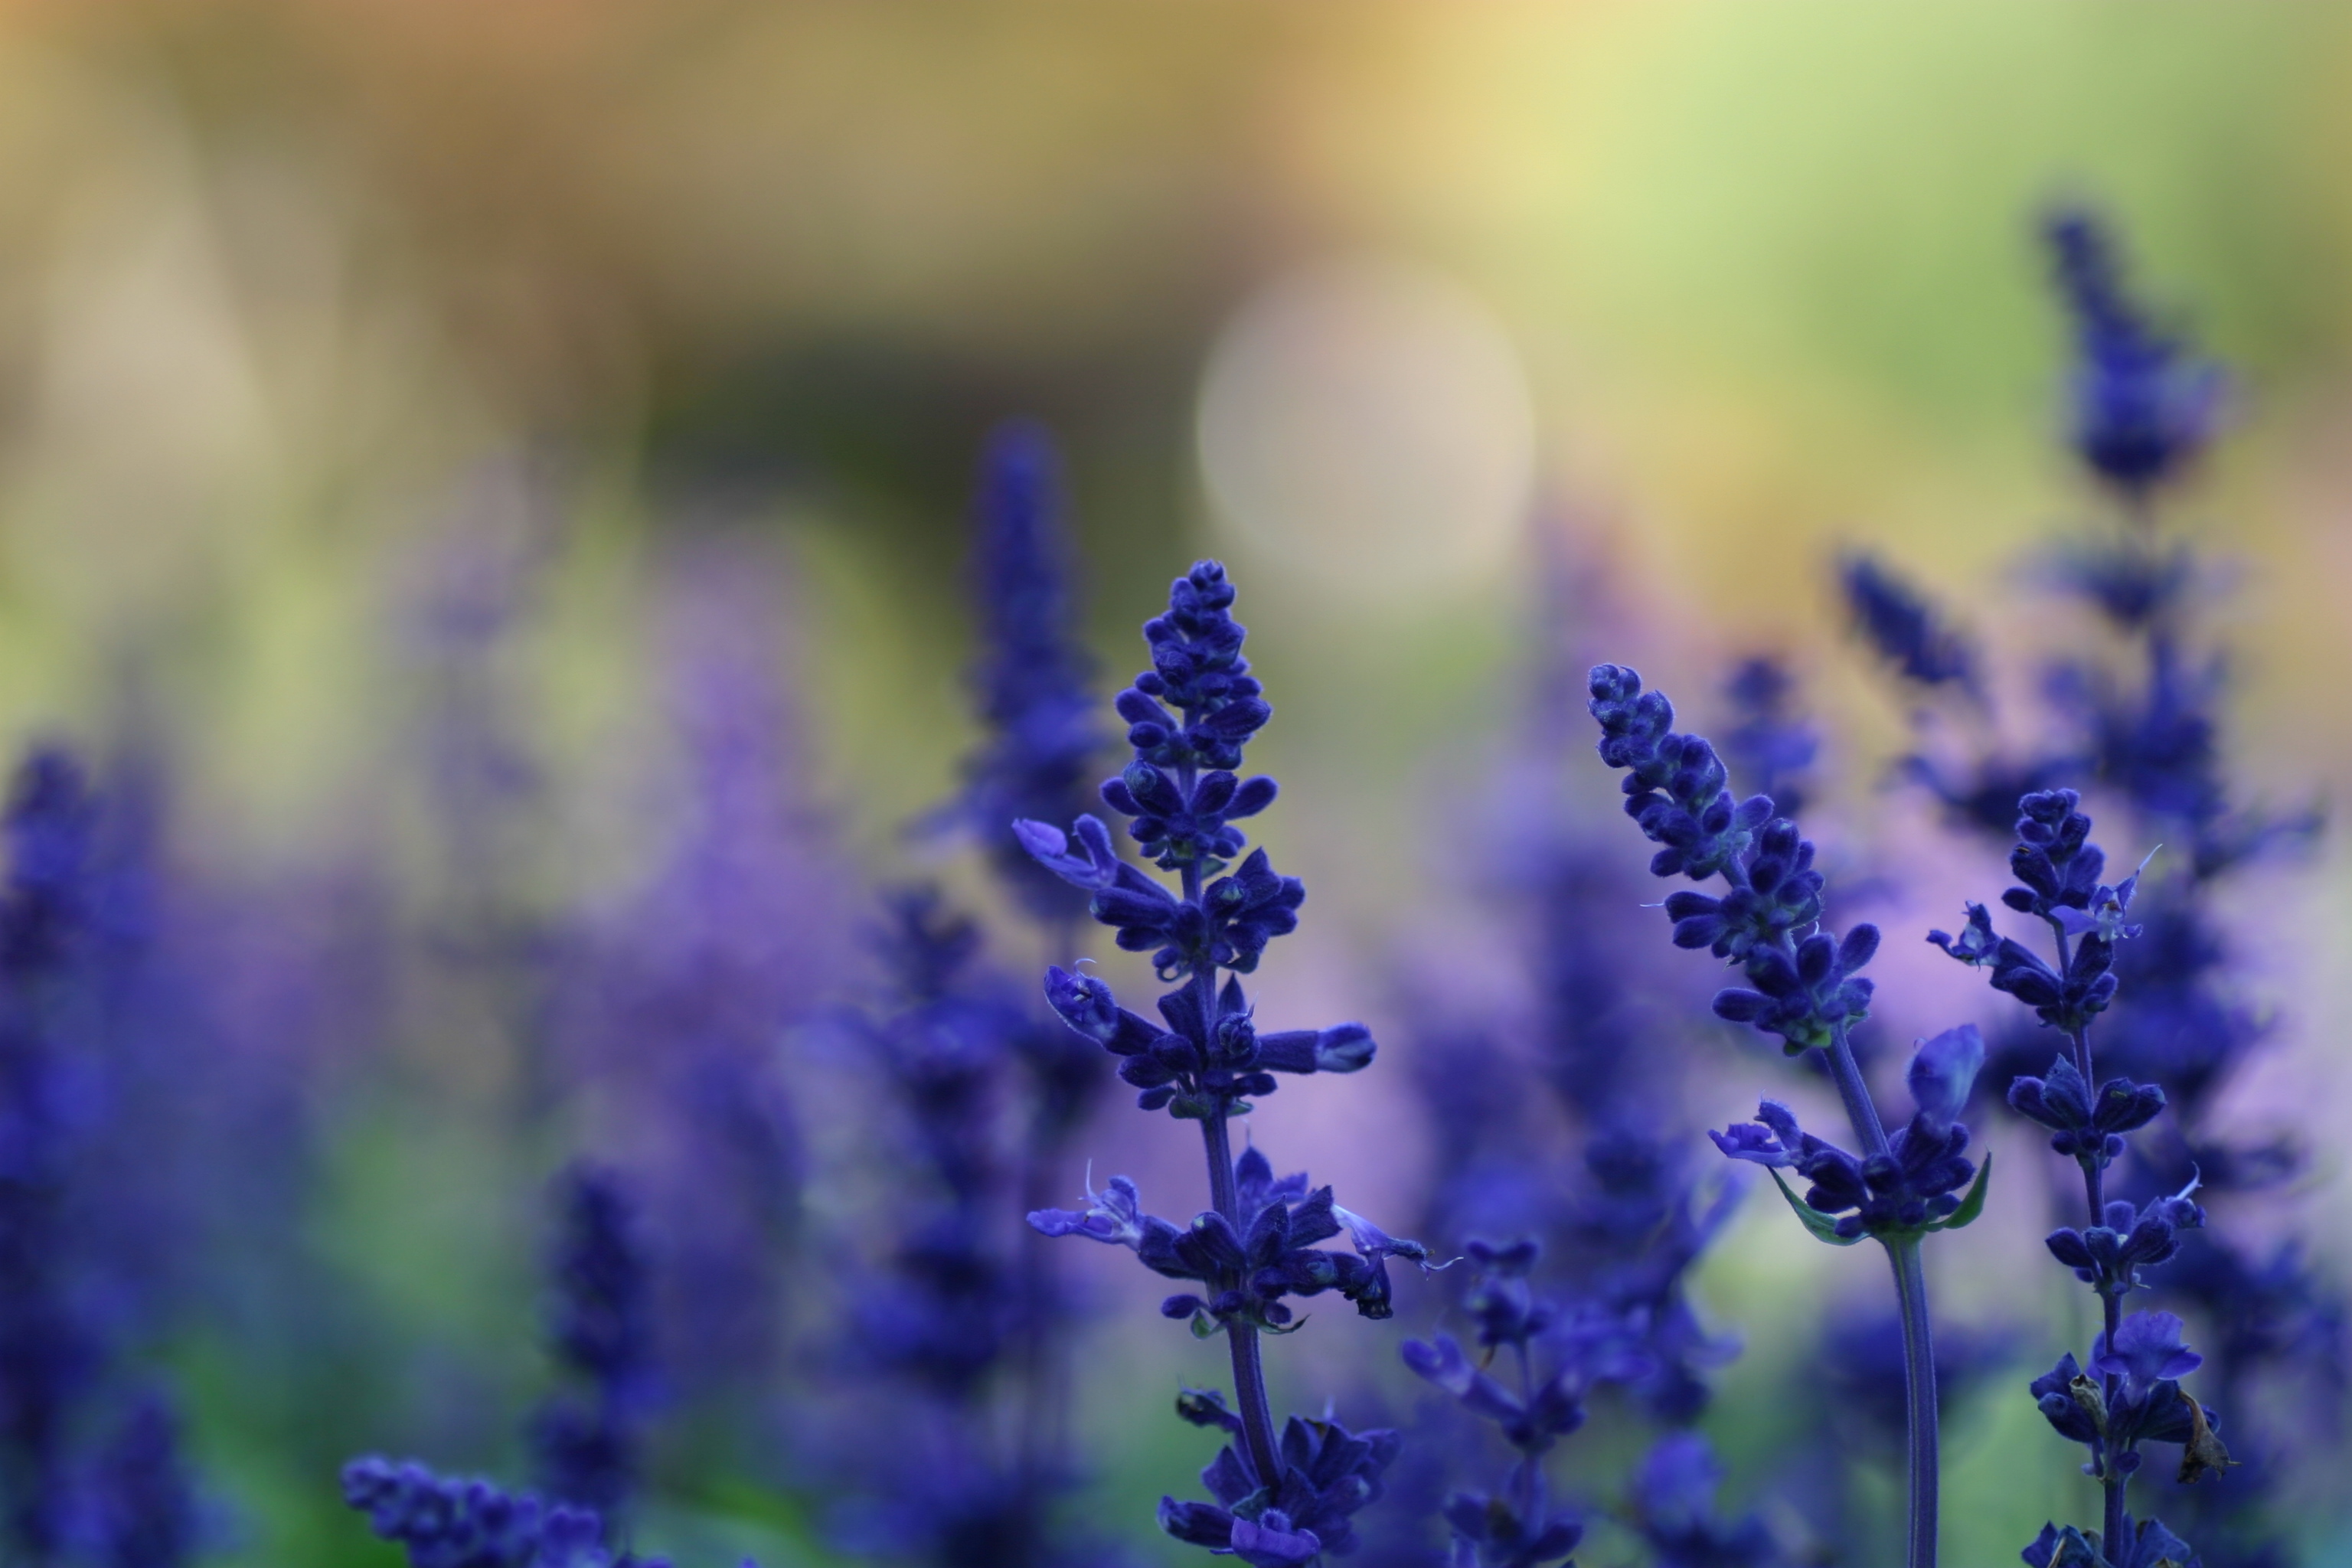 Flowers blue lavender plants meadow summer background blur